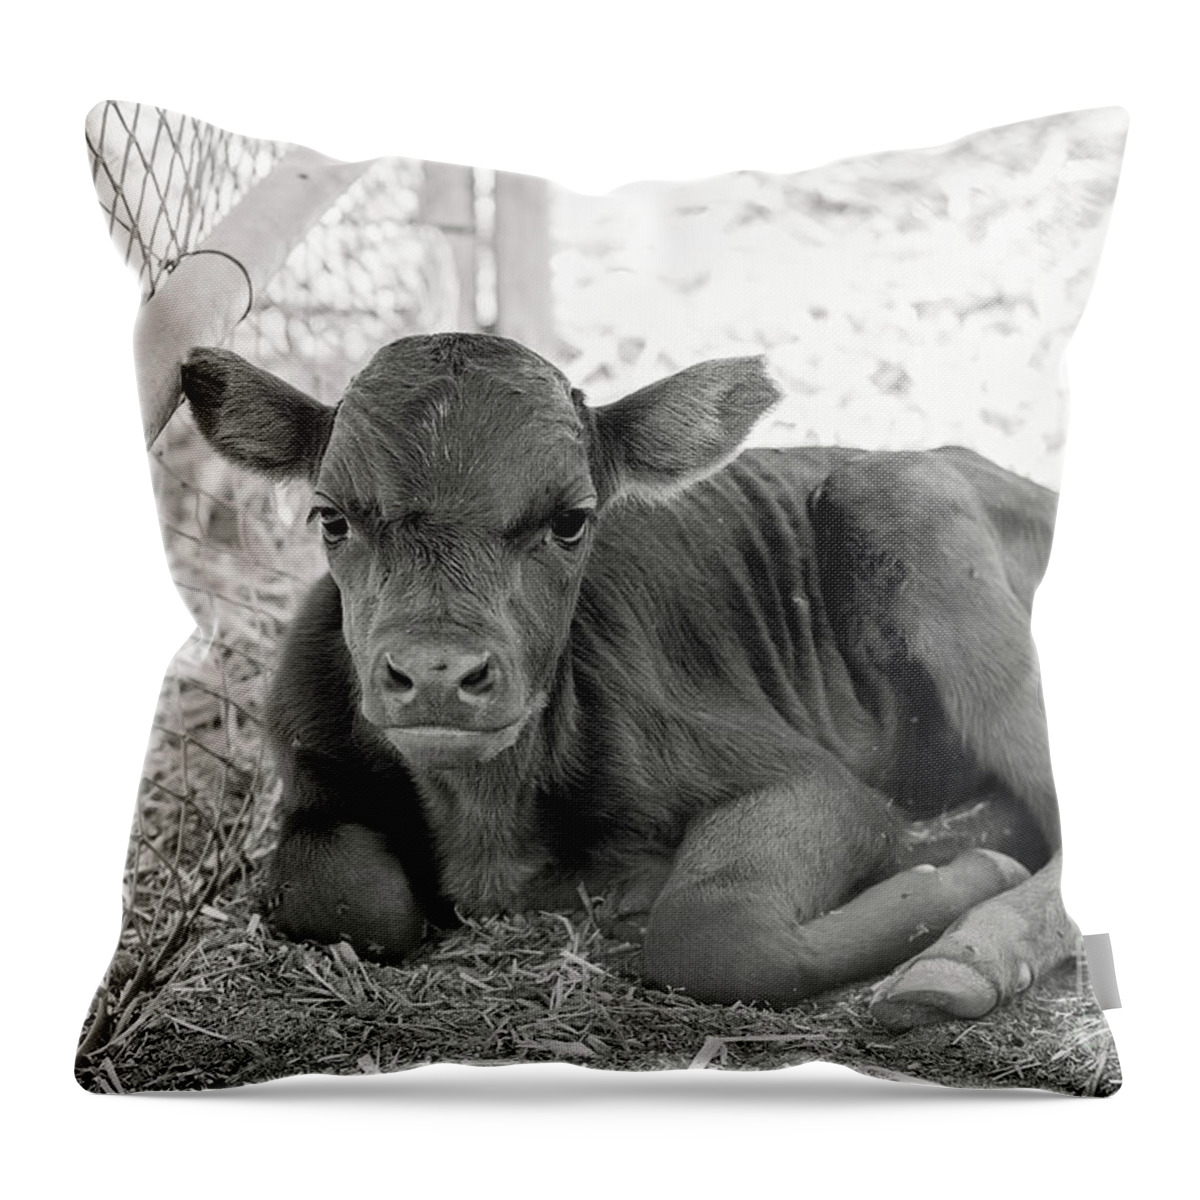 Grumpy Throw Pillow featuring the photograph Grumpy Cow by Eddie Yerkish